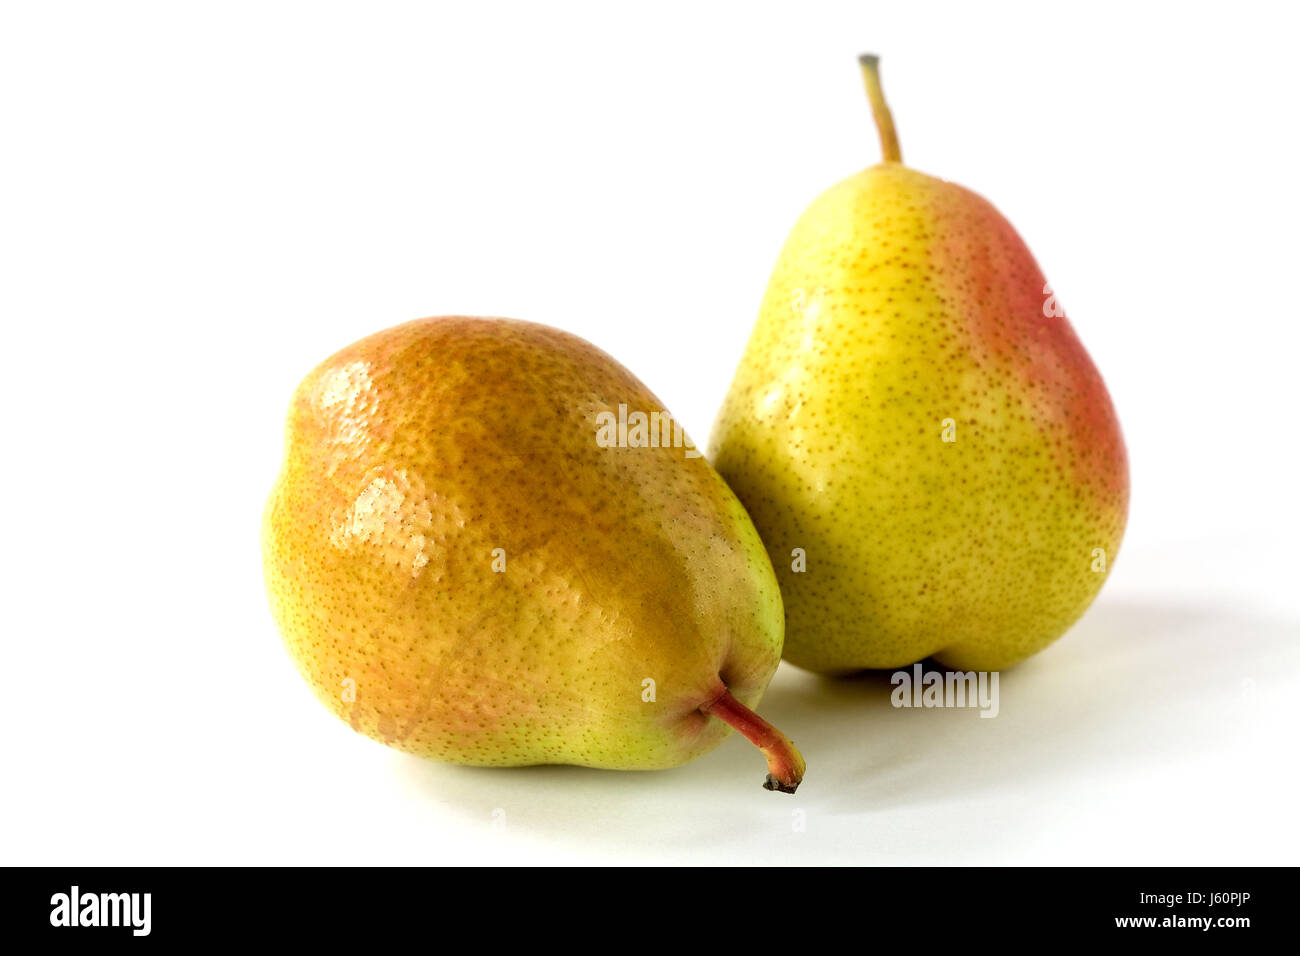 vitamins vitamines progenies fruits pome fruit pears vitamins vitamines eco Stock Photo